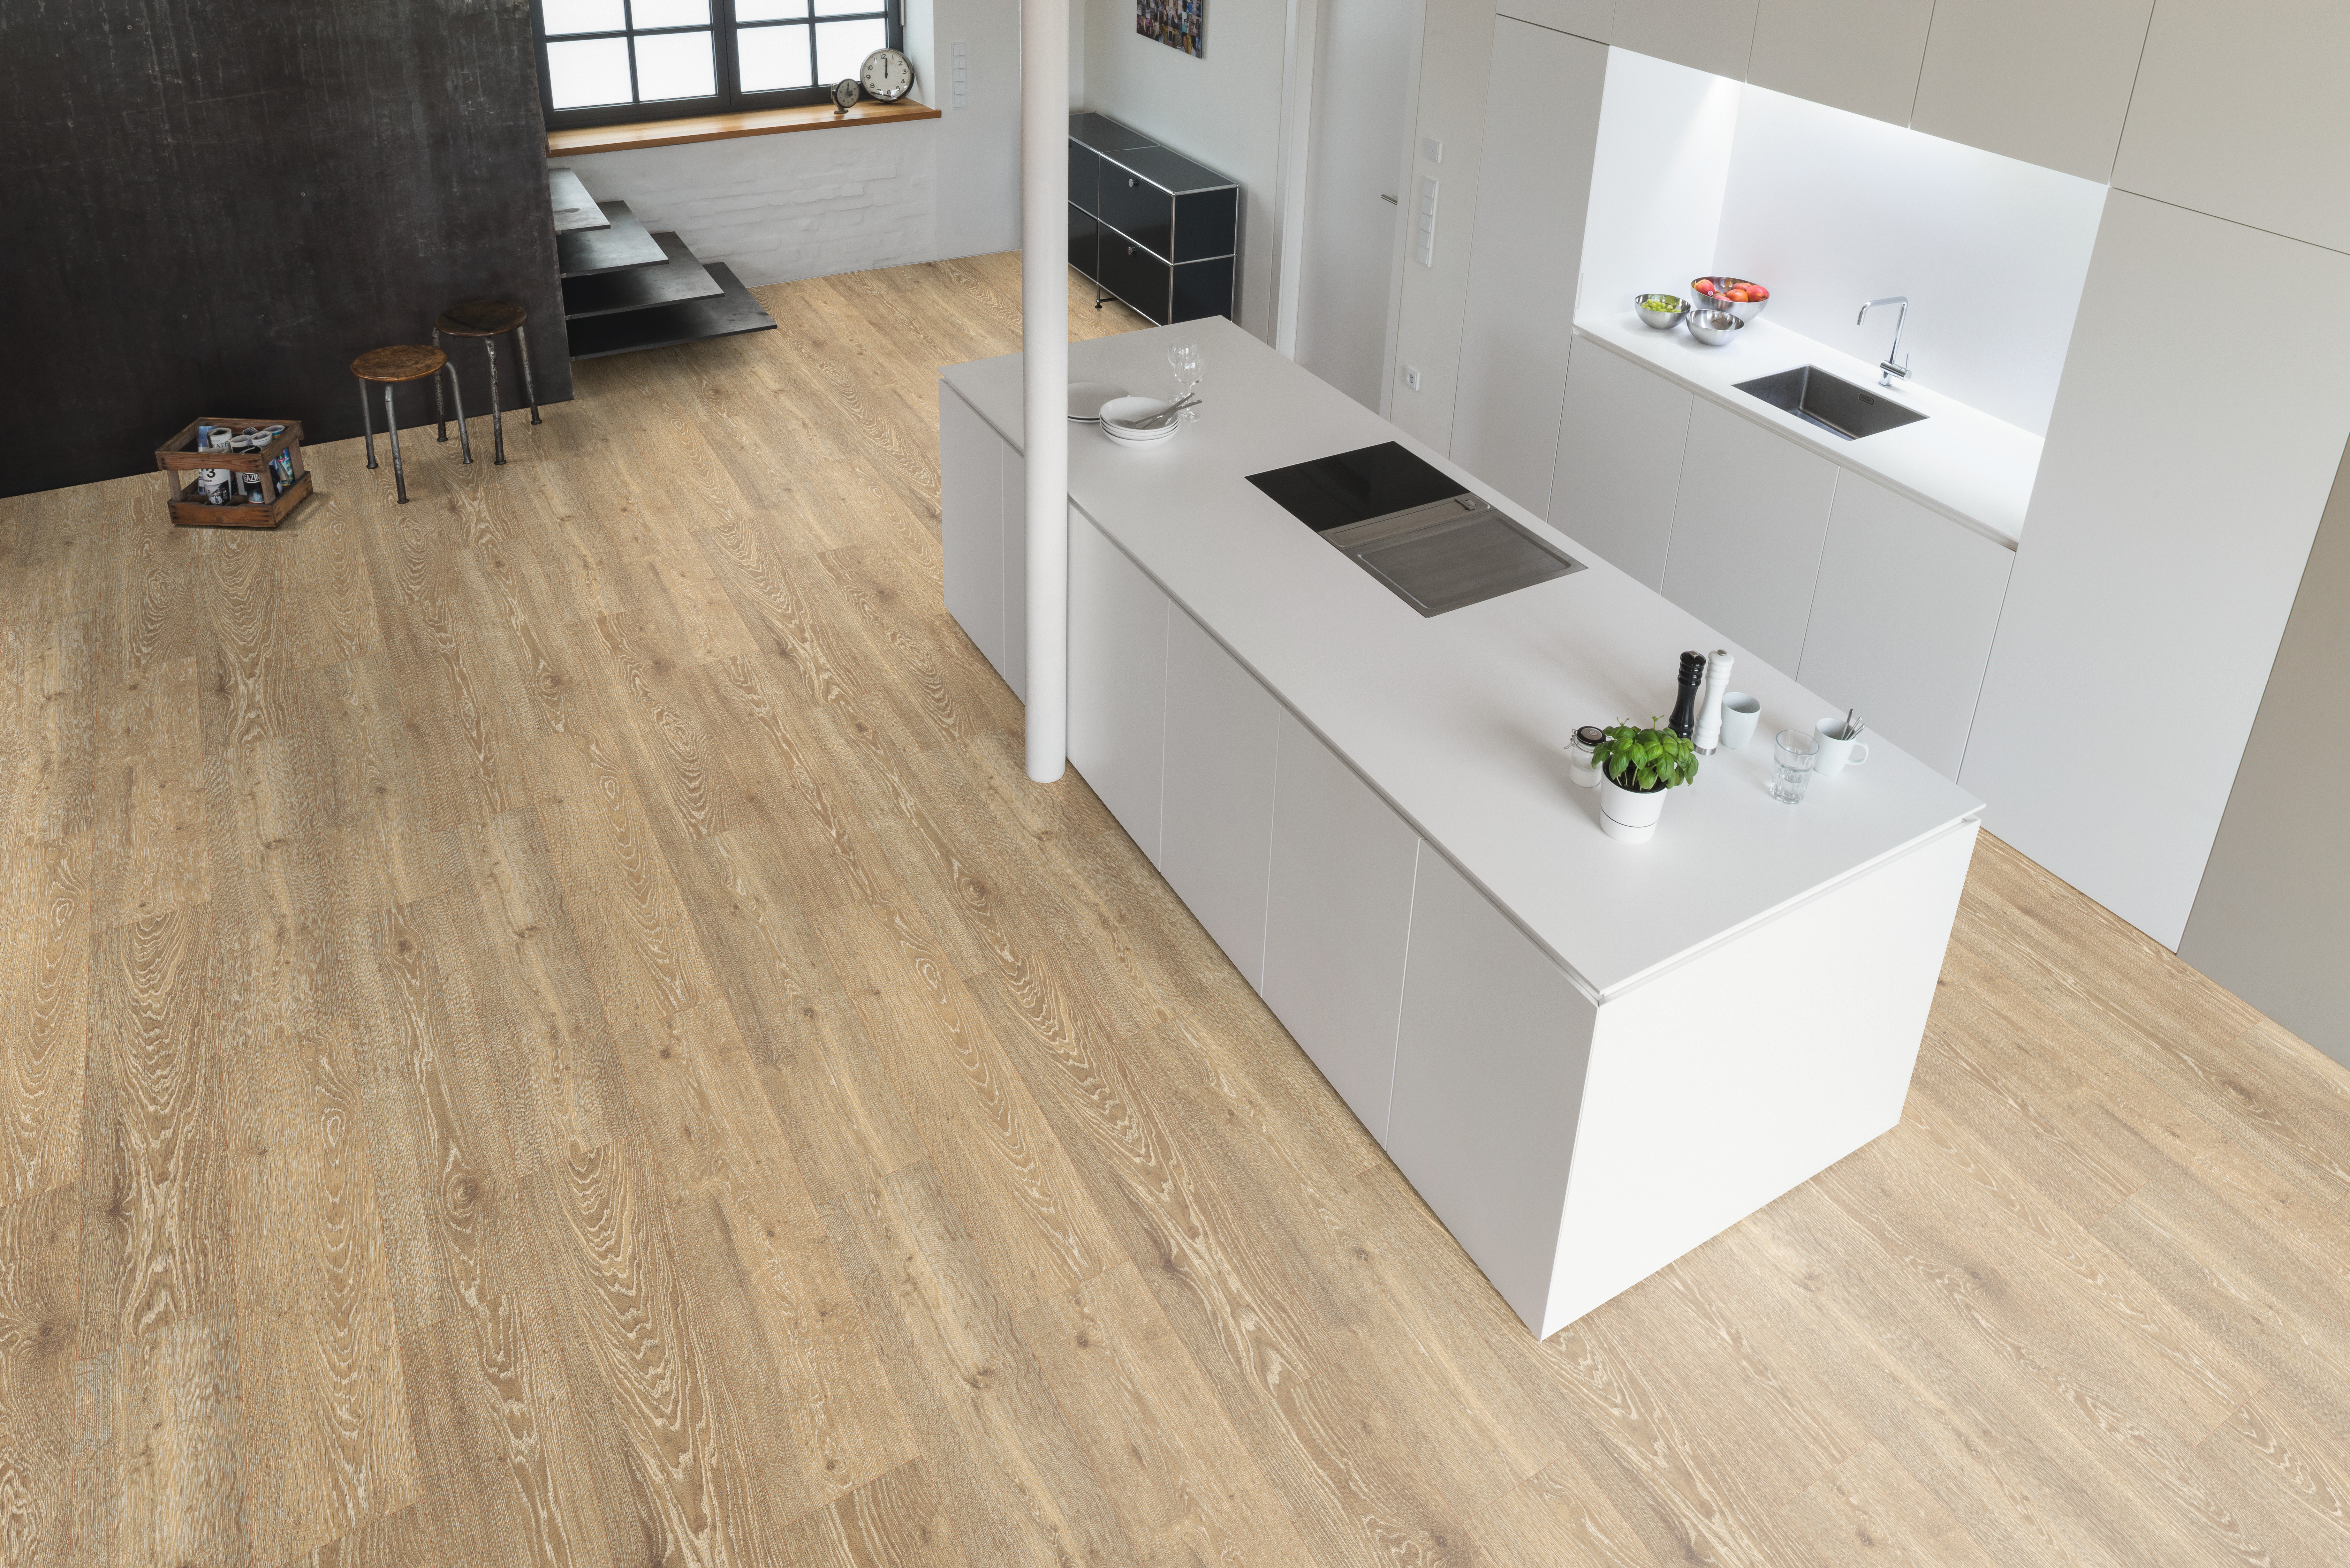 Authentic surfaces ensure attractive flooring